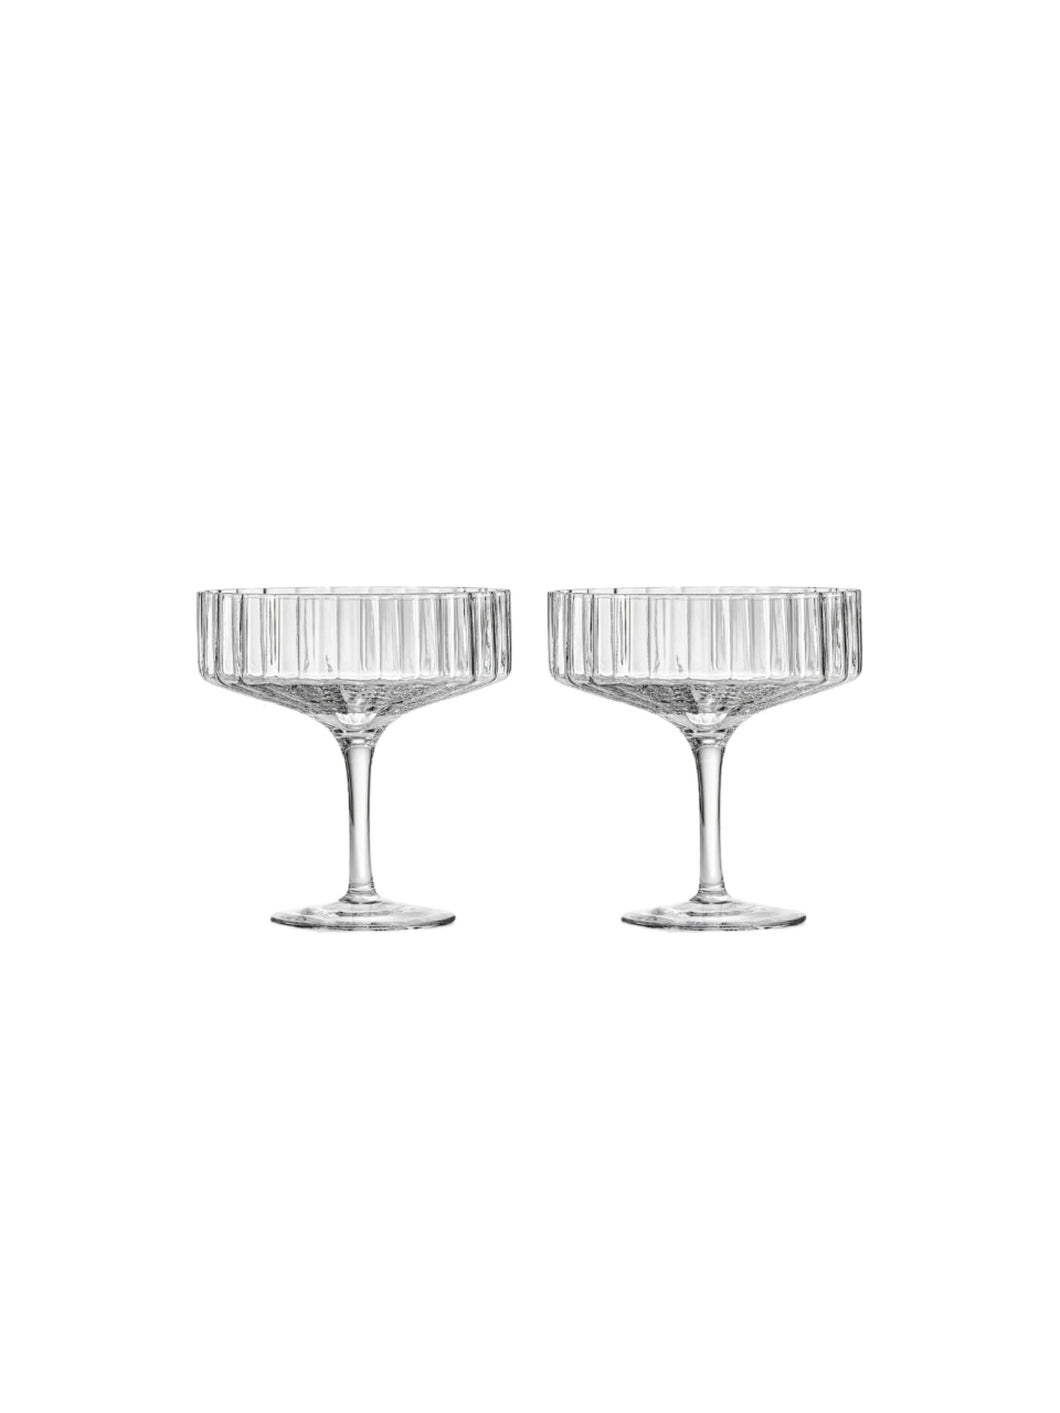 MODERNISM | Cullinan Crystal Champagne Coupe glasögon